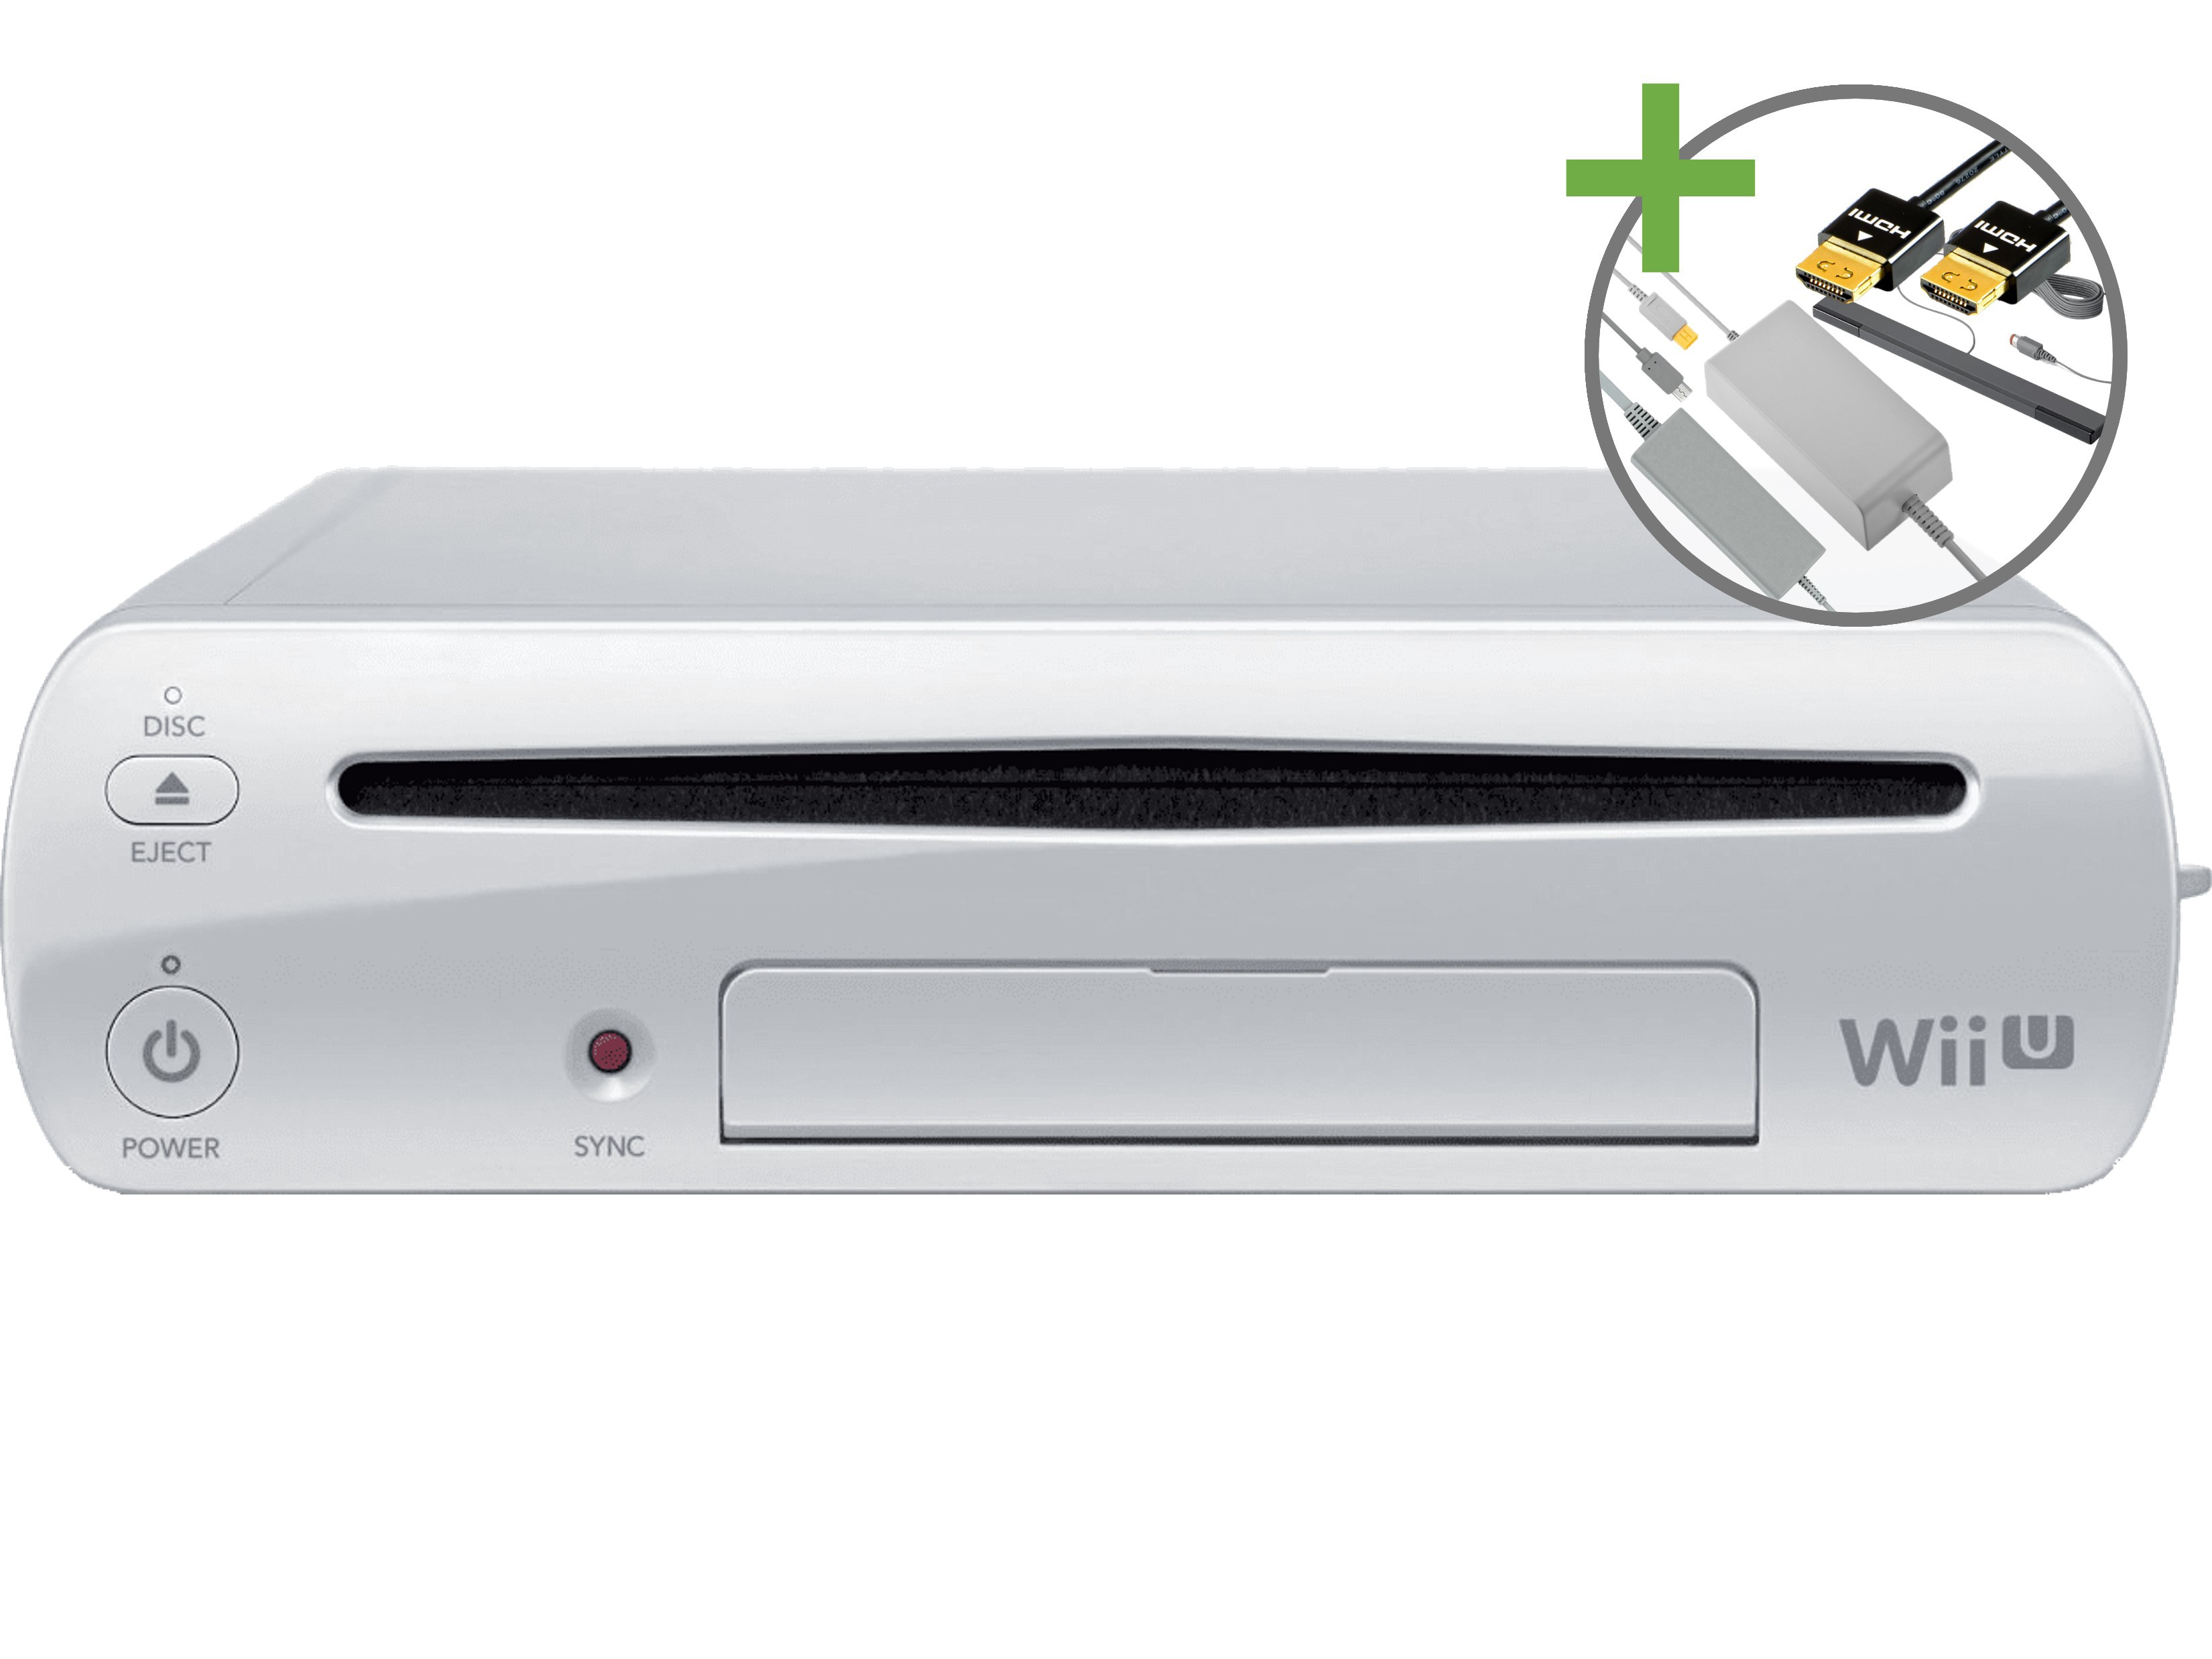 Nintendo Wii U Starter Pack - Basic White Pack Edition [Complete] - Wii U Hardware - 4